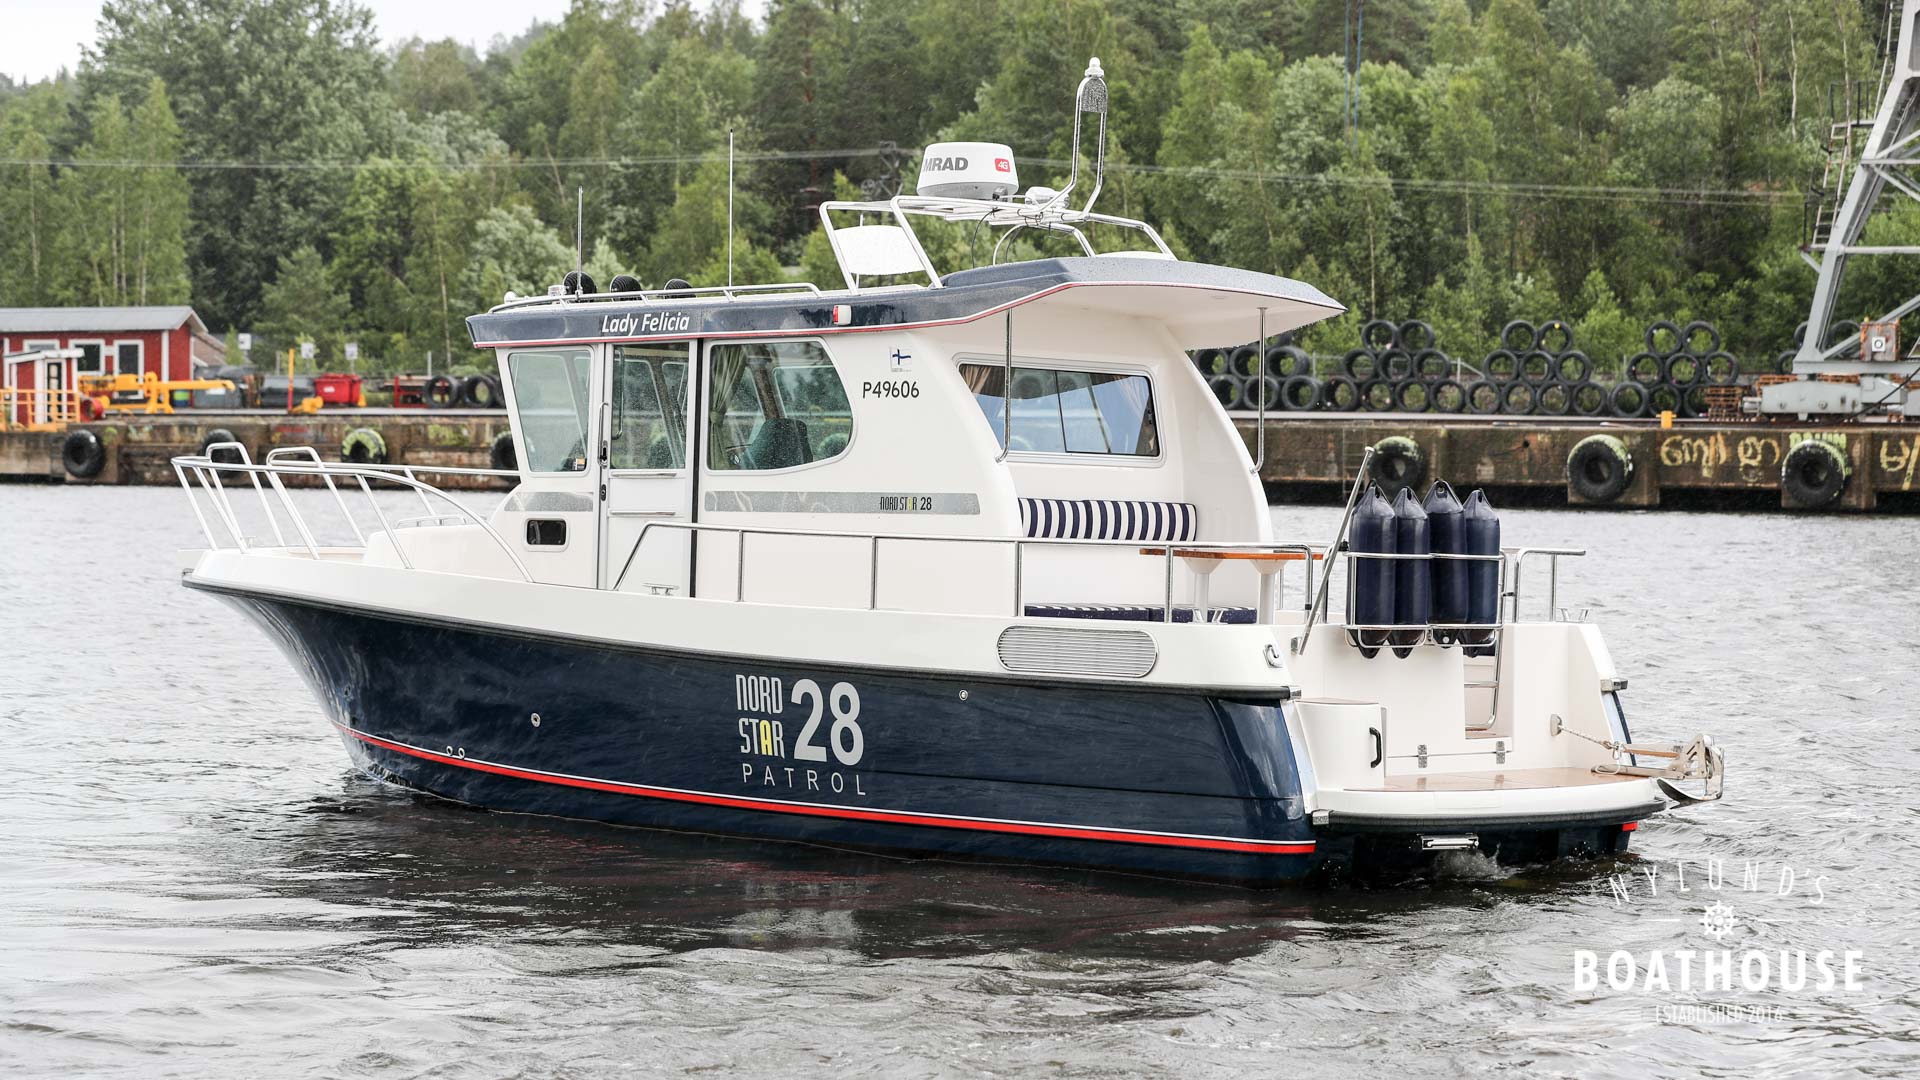 Nord Star 28 Patrol hyttbåt hyttivene